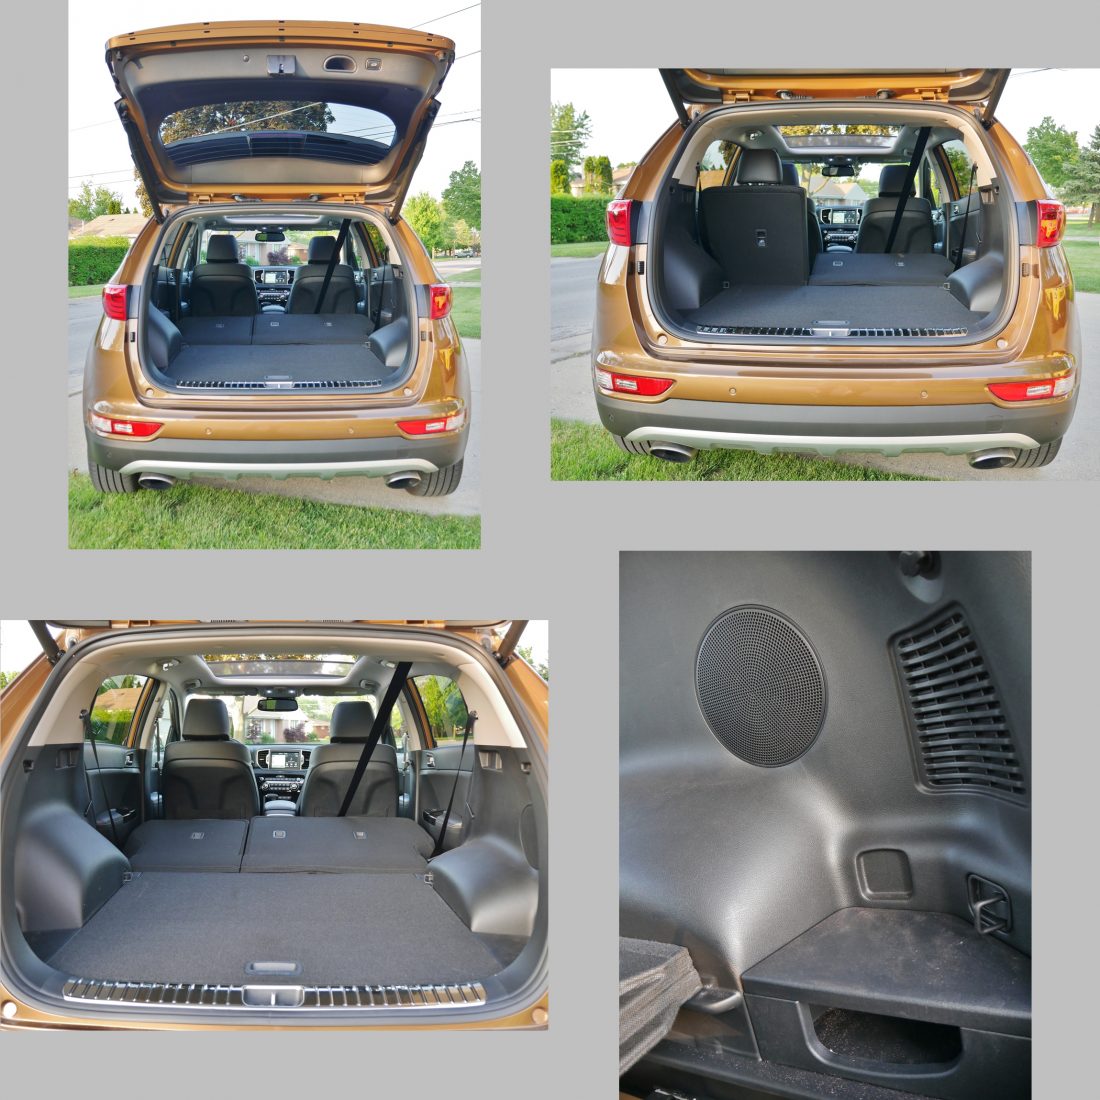 2017 Kia Sportage SX Turbo AWD compact crossover utility vehicle: cargo storage